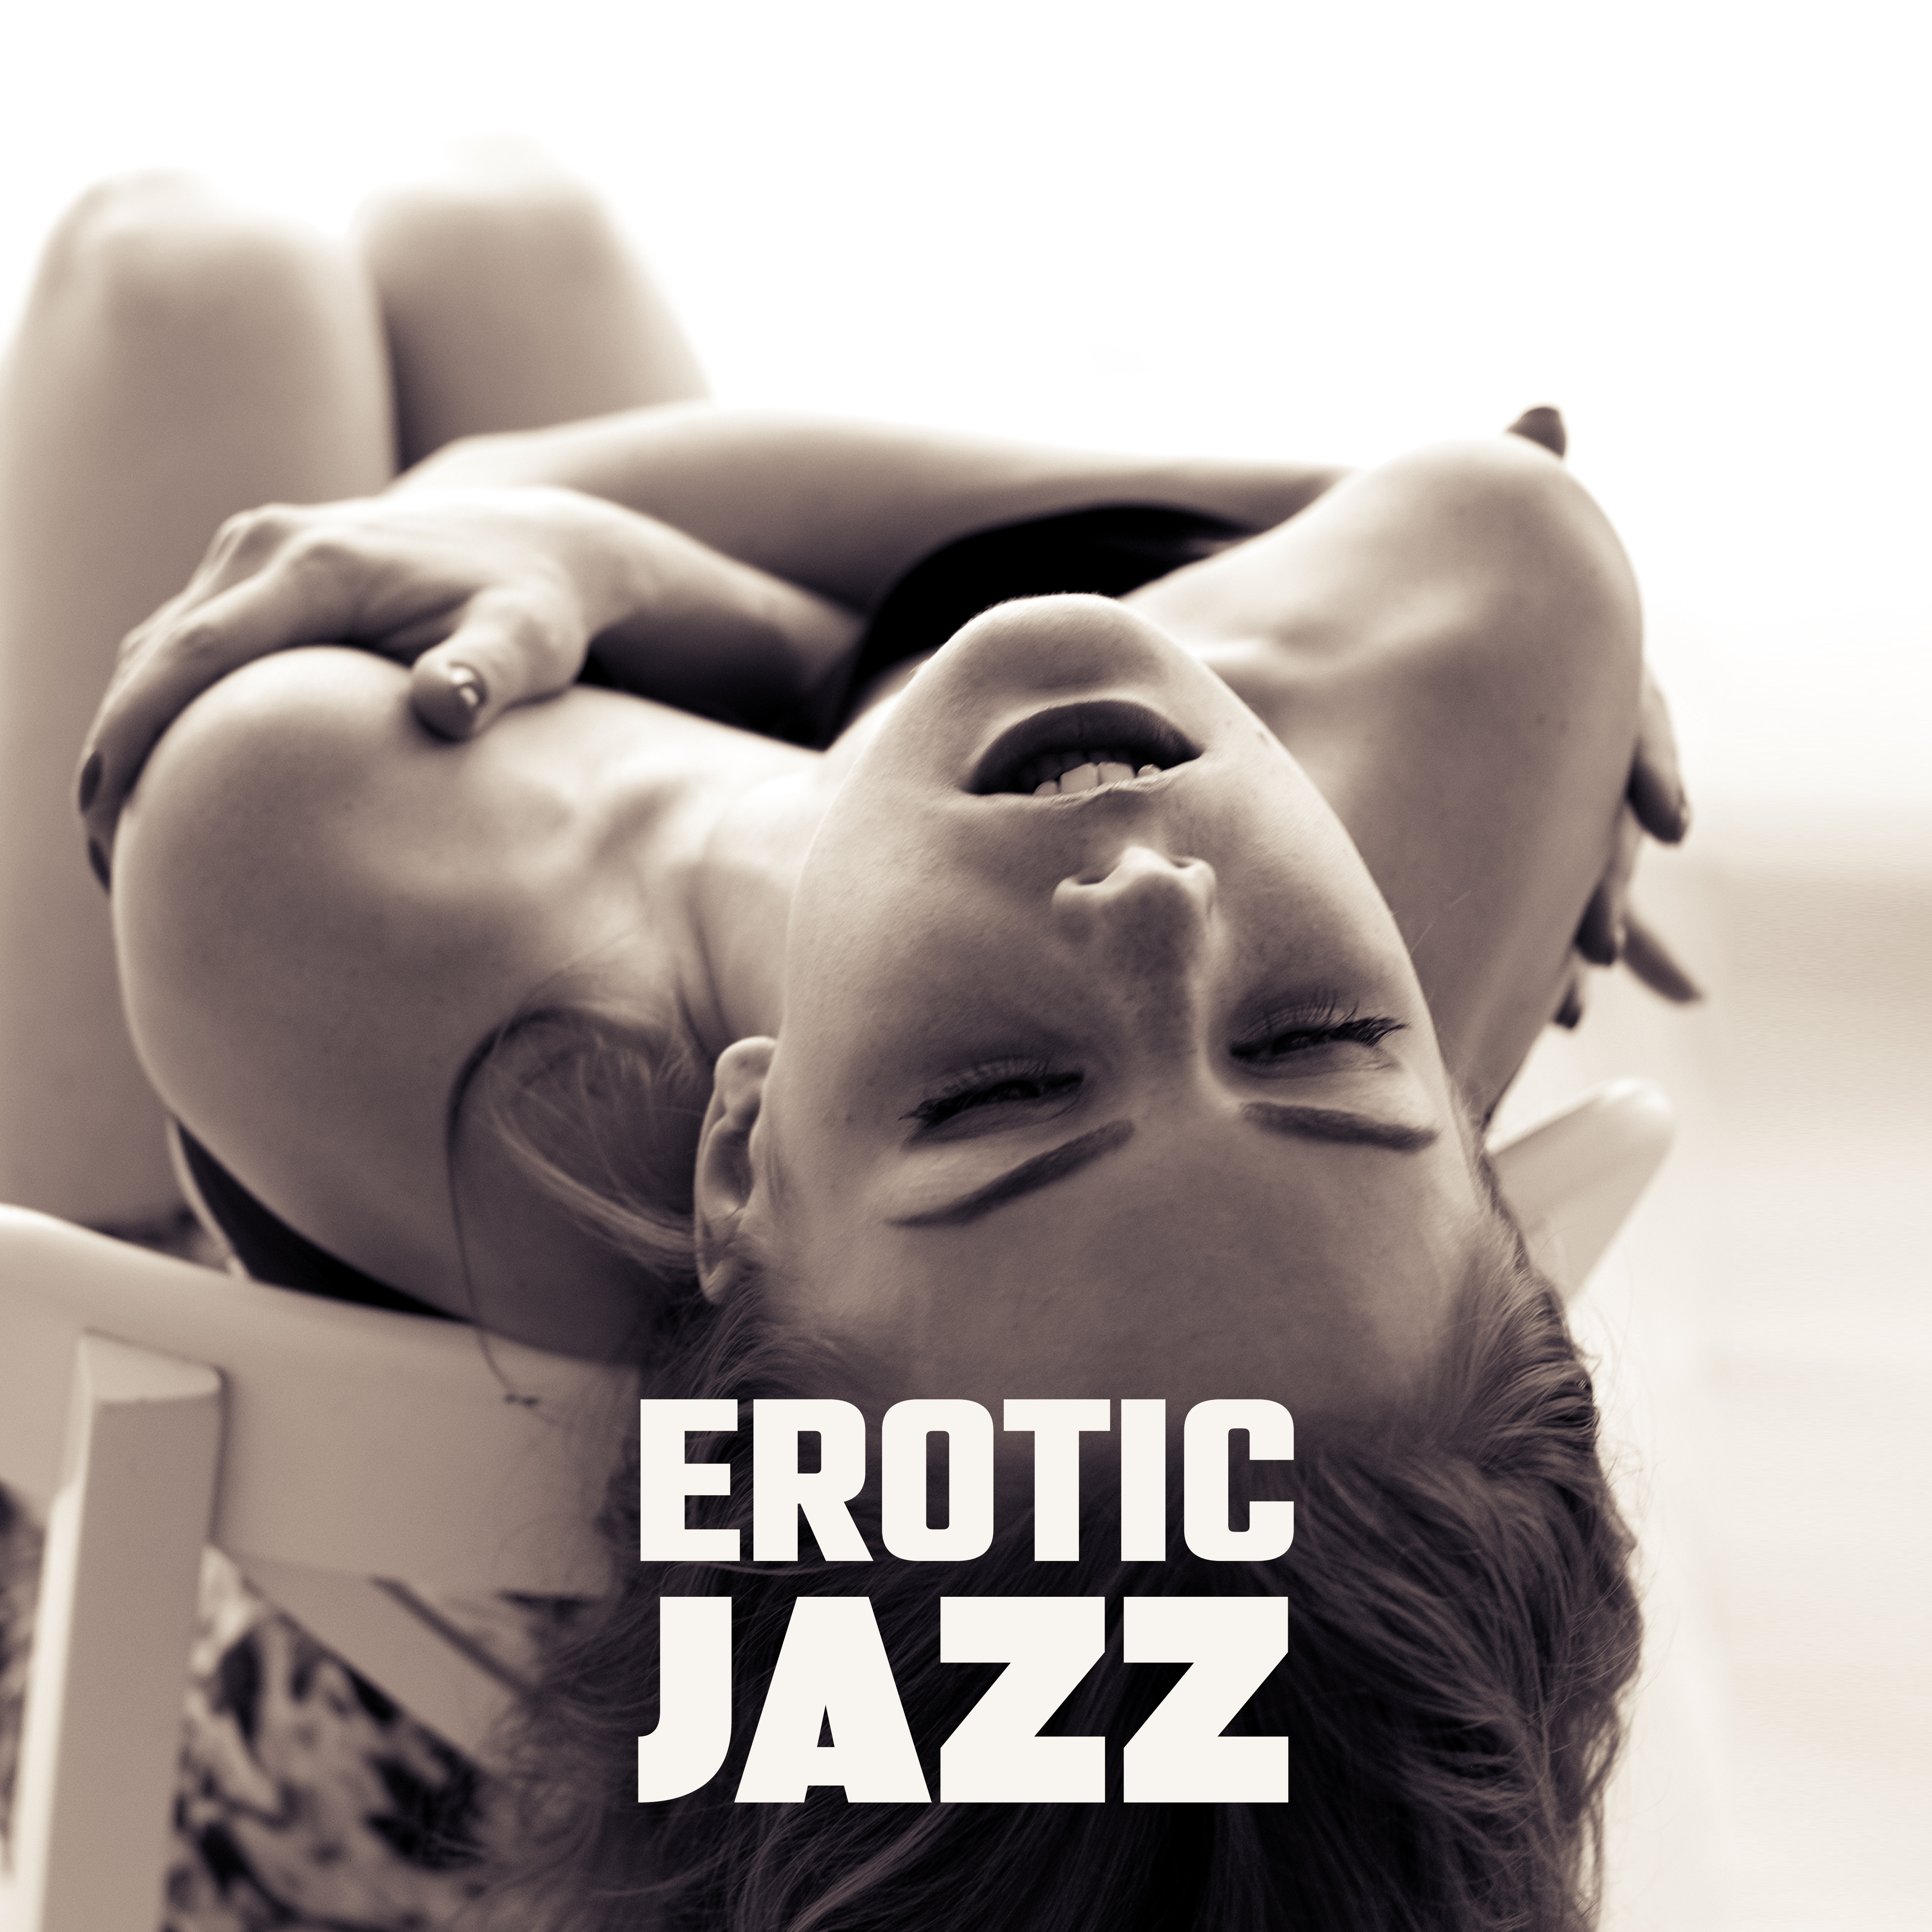 Erotic Jazz – Deep Massage, Sensual Music for Relaxation, Erotic Lounge, Saxophone, Romantic Night, Making Love